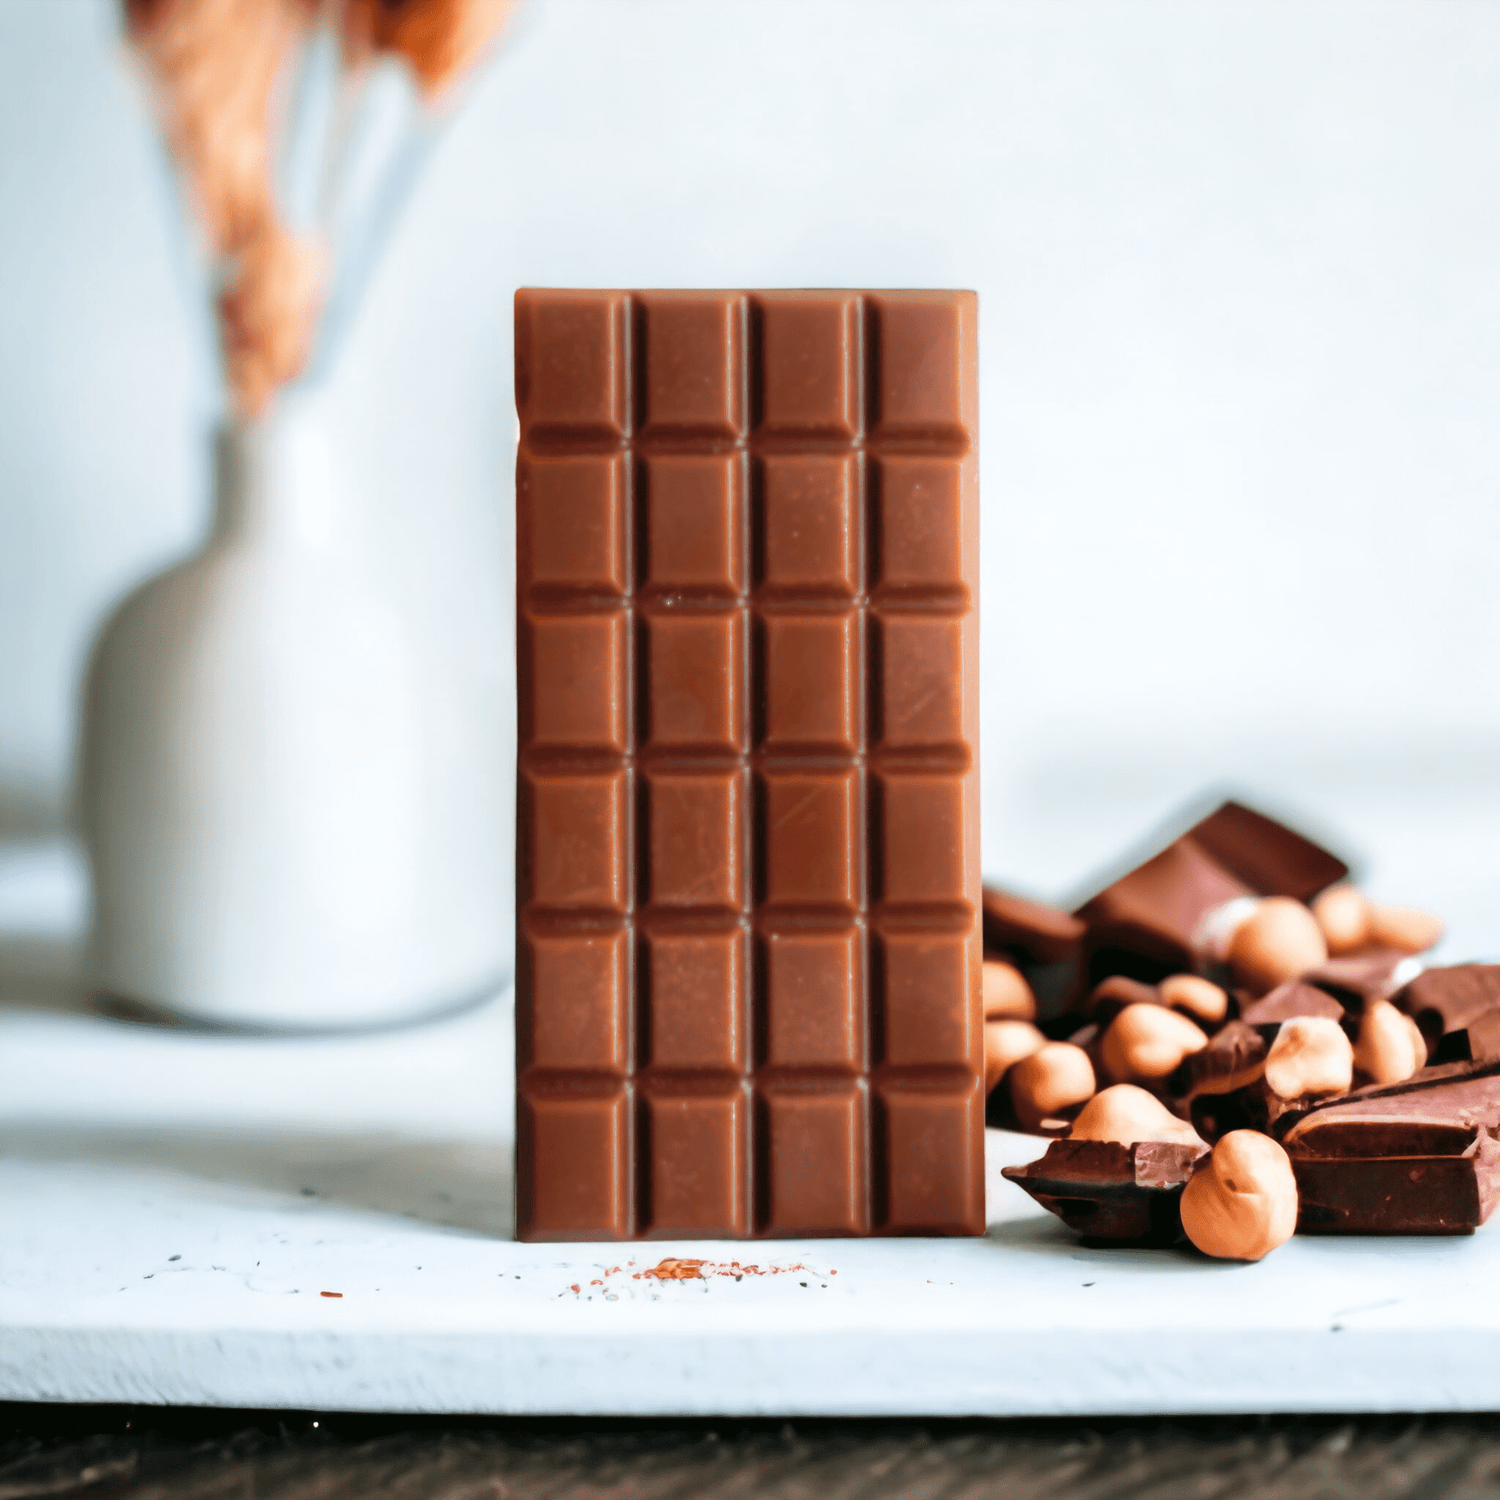 Chocolate Hazelnut - Scent Stories